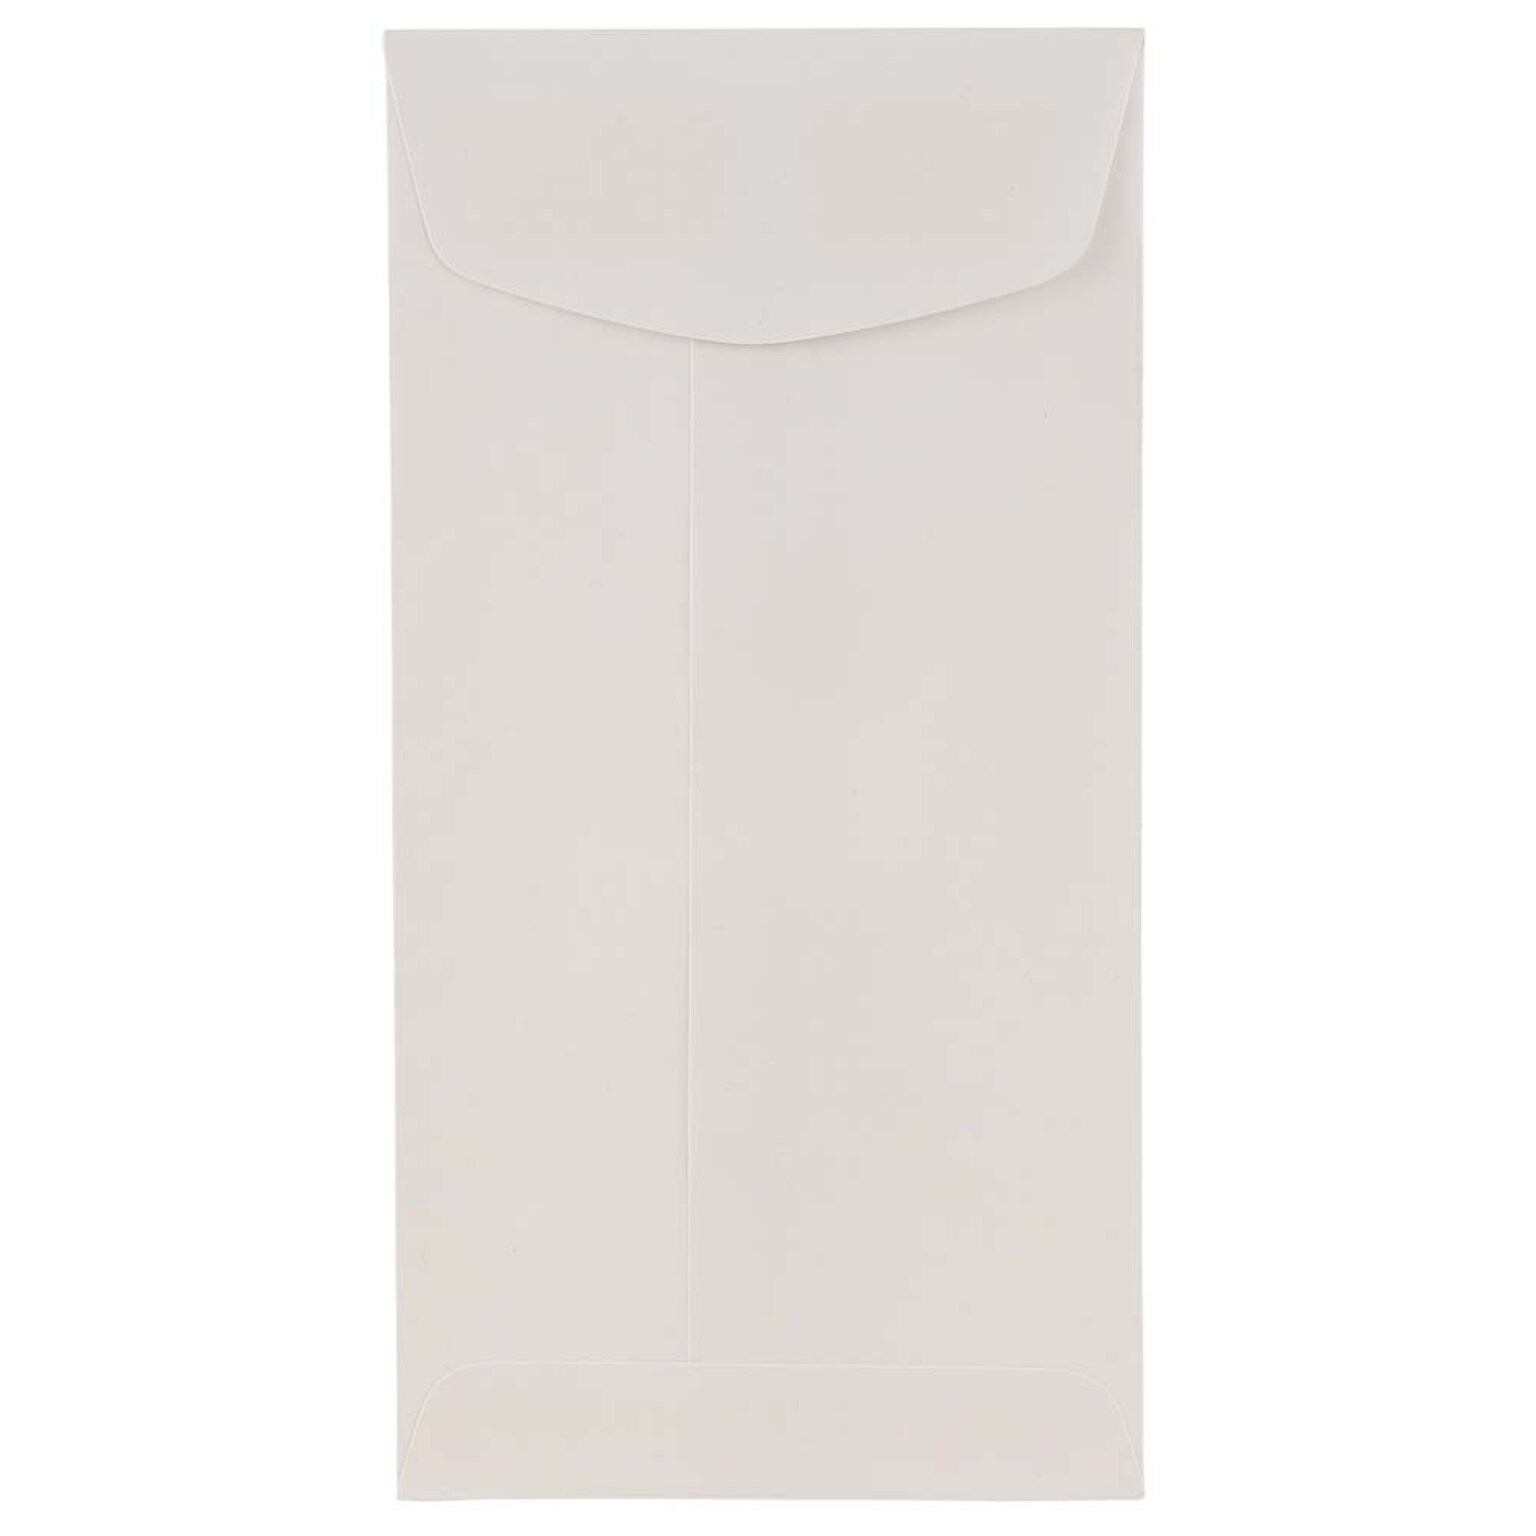 JAM Paper Open End Booklet Envelope, 3 7/8 x 7 1/2, White, 50/Pack (1623987I)